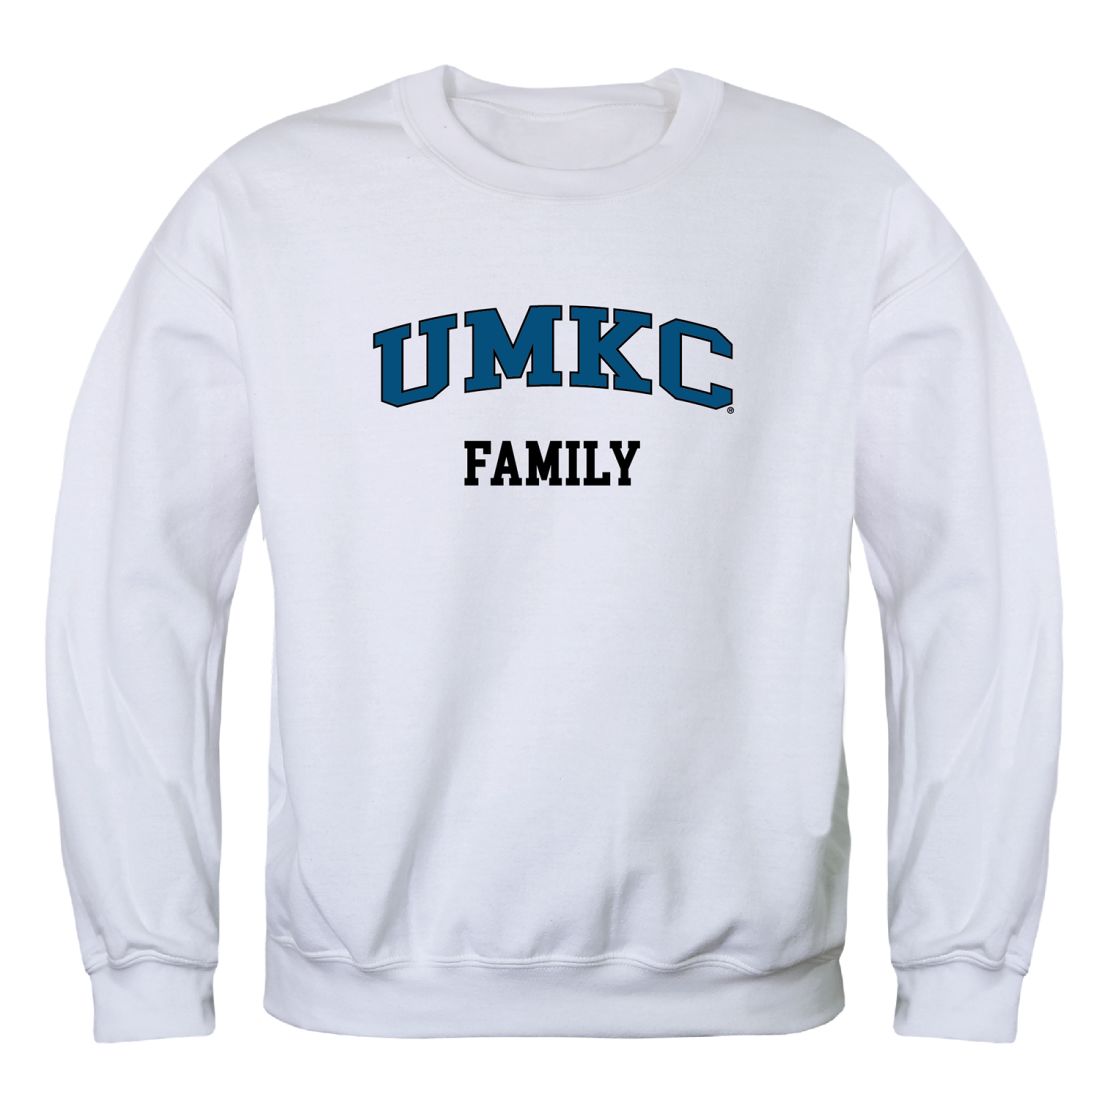 University-of-Missouri-Kansas-City-Roos-Family-Fleece-Crewneck-Pullover-Sweatshirt